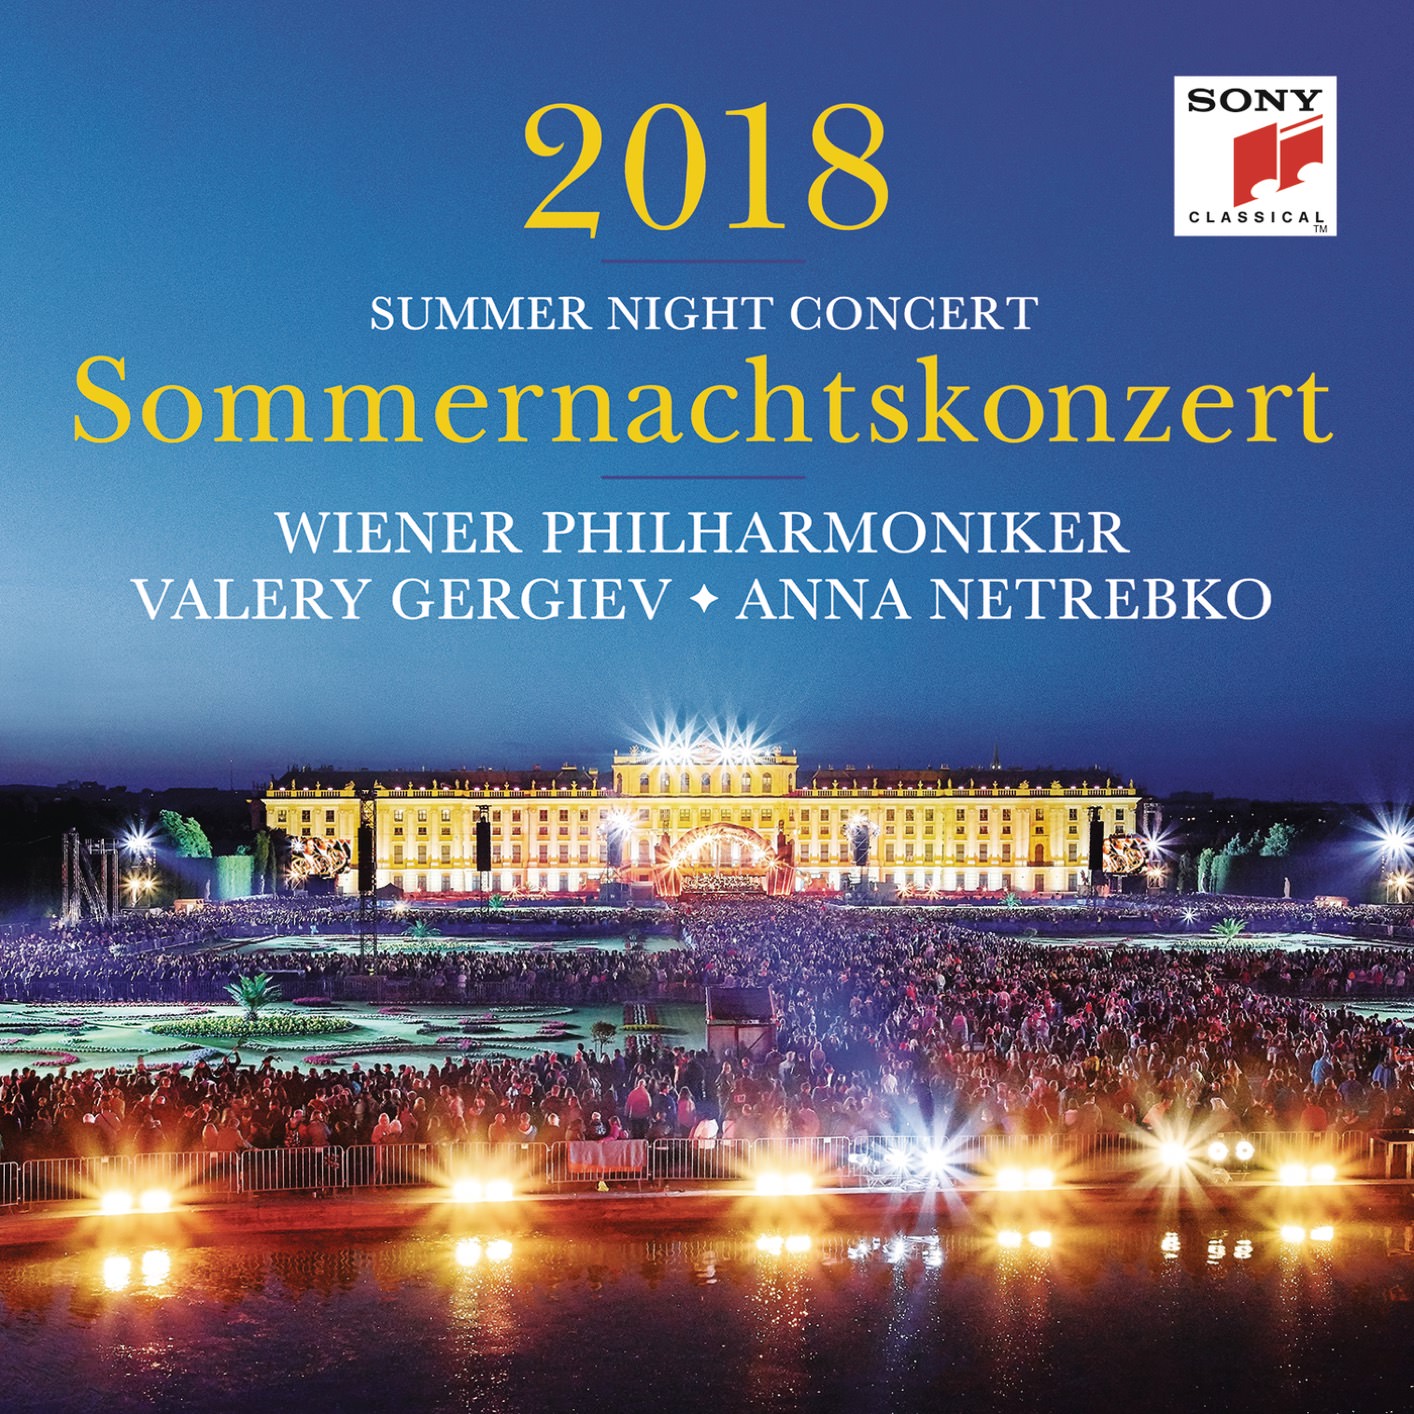 Valery Gergiev & Wiener Philharmoniker – Sommernachtskonzert 2018 / Summer Night Concert 2018 (2018) [FLAC 24bit/96kHz]